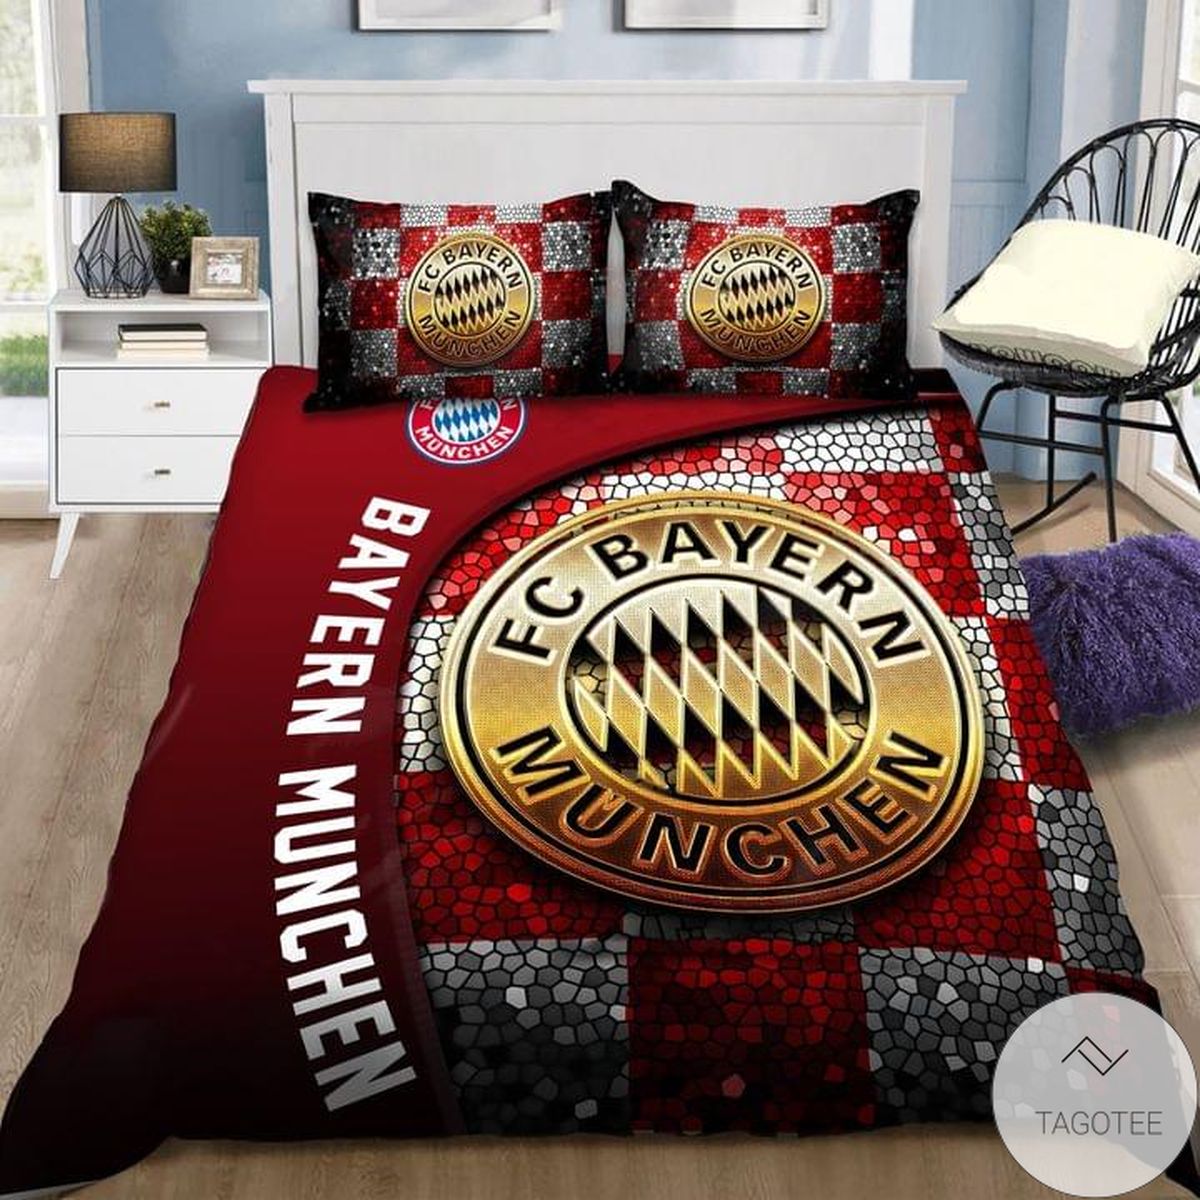 Fc Bayern Munich Bedding Set